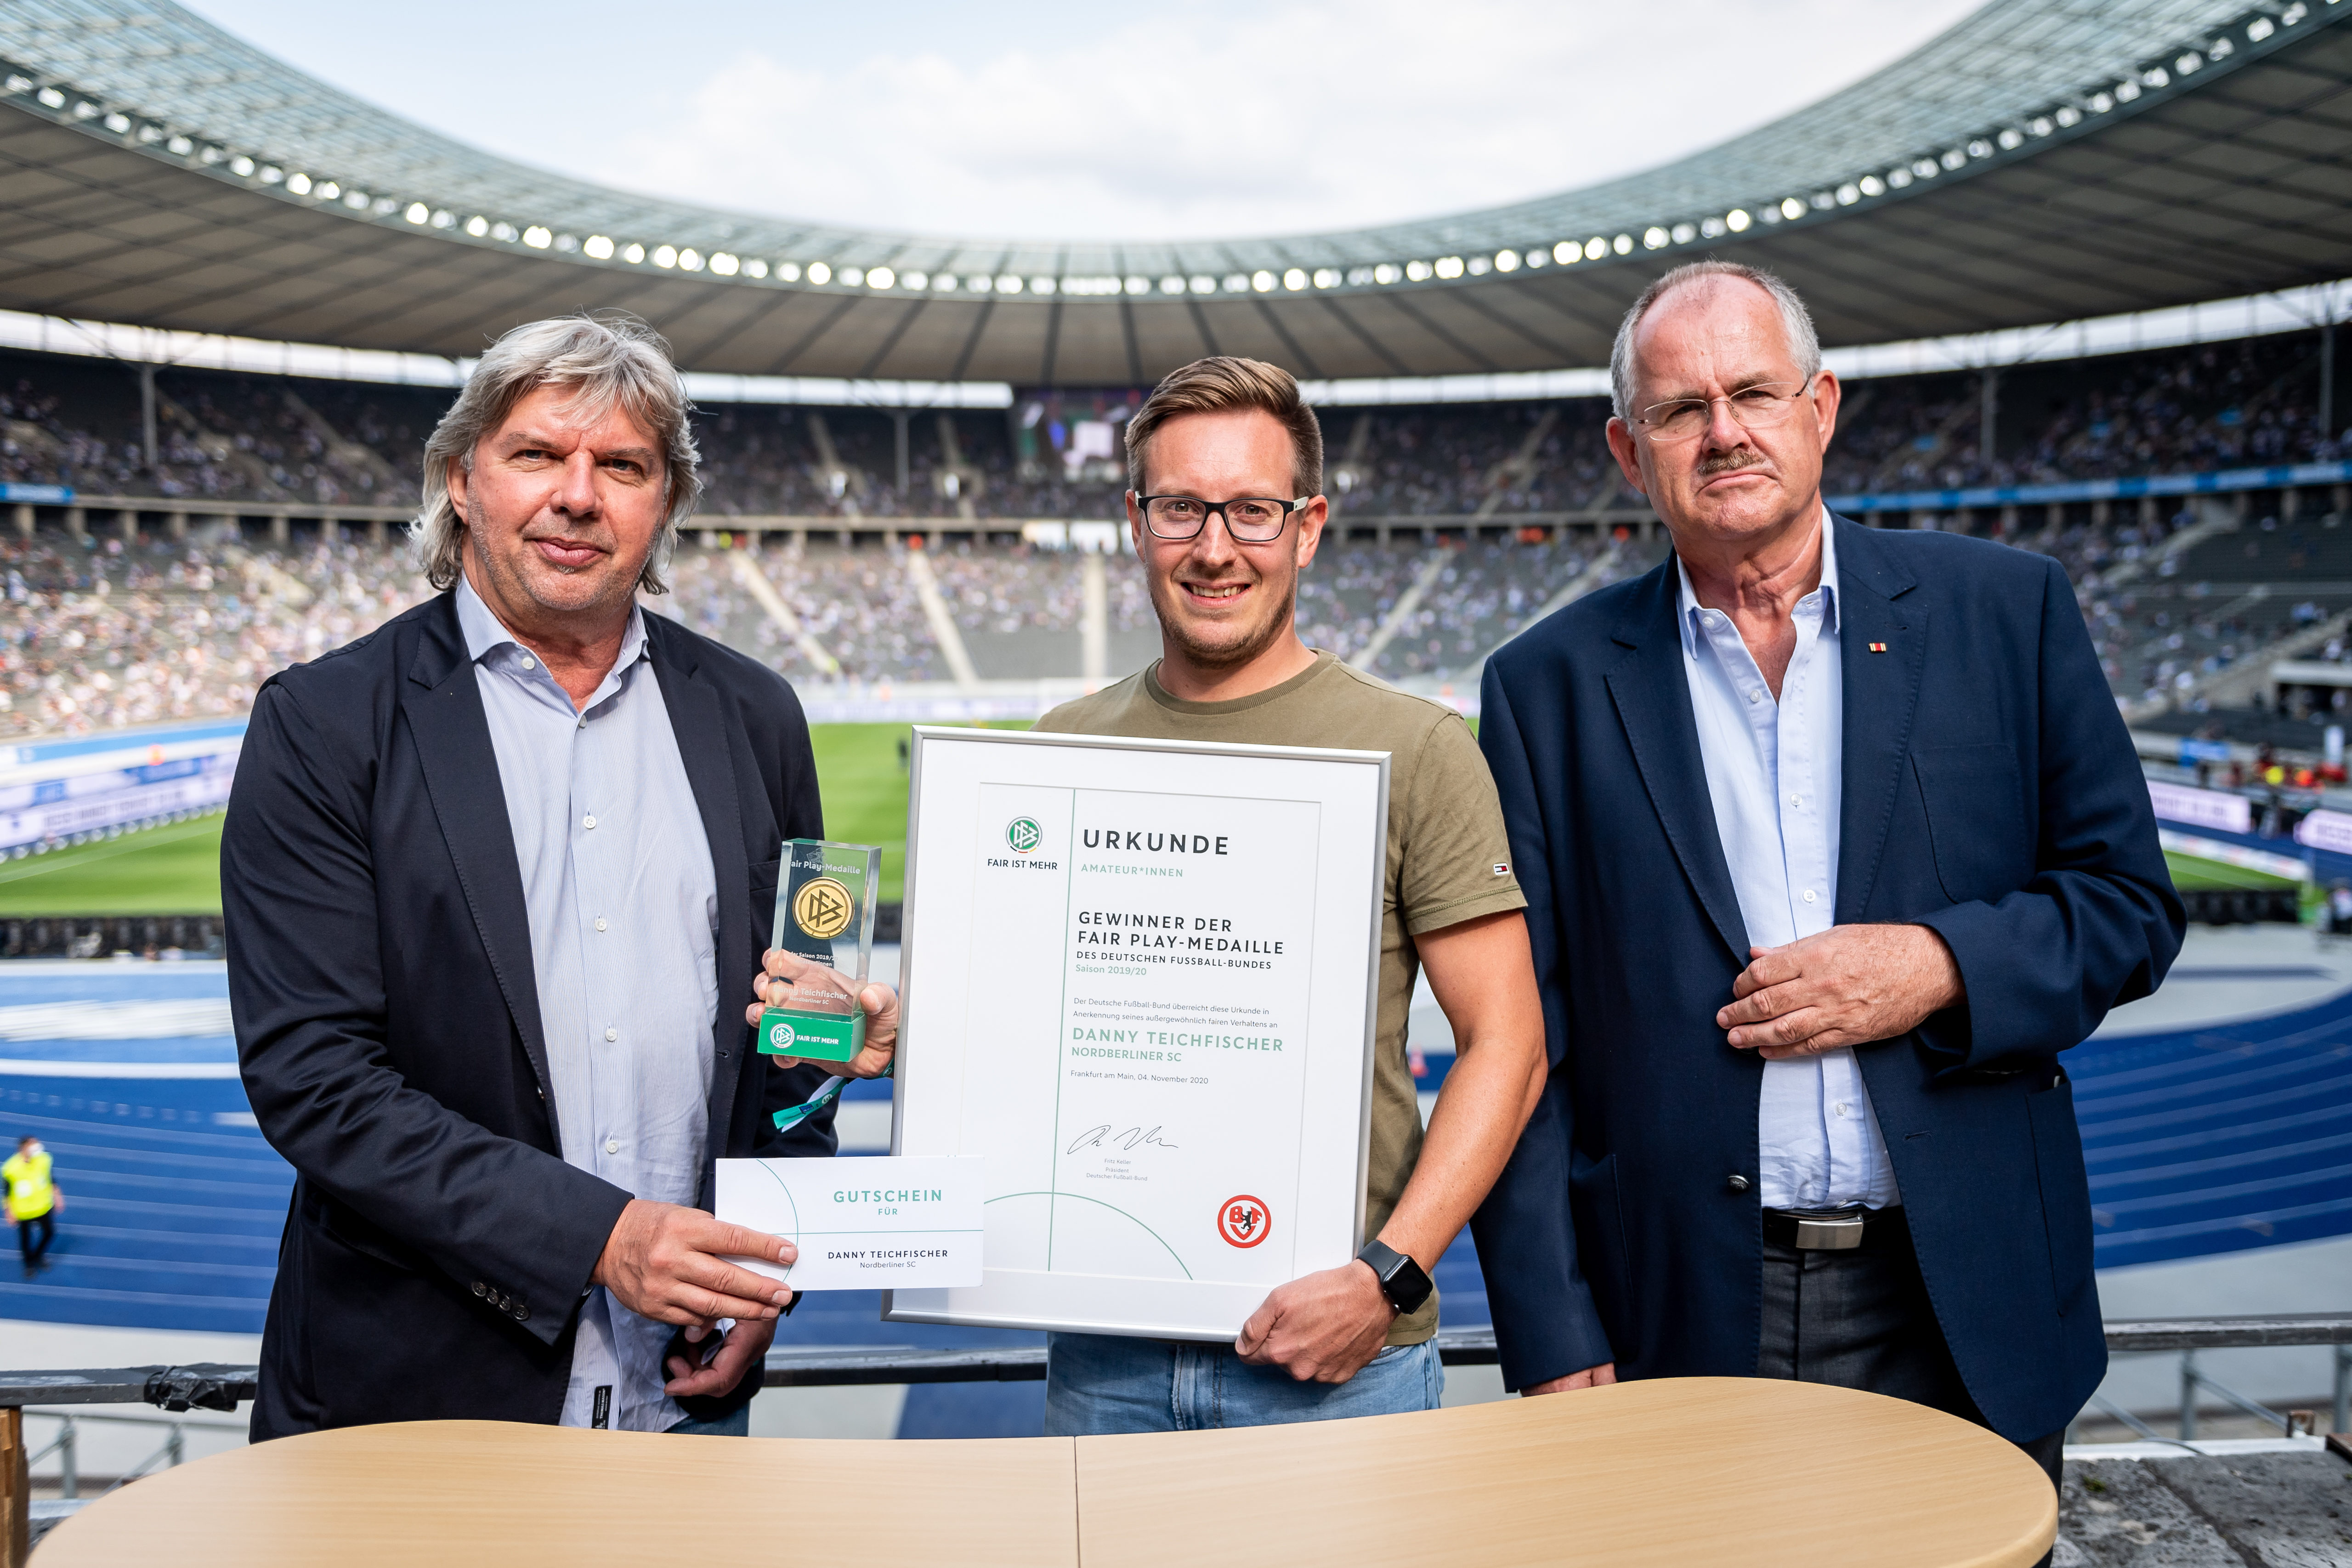 DFB-Vizepräsident Ronny Zimmermann, Danny Tiechfischer (Gewinner der Fair Play-Medaille) und BFV-Präsident Bernd Schultz (v.l.n.r.).